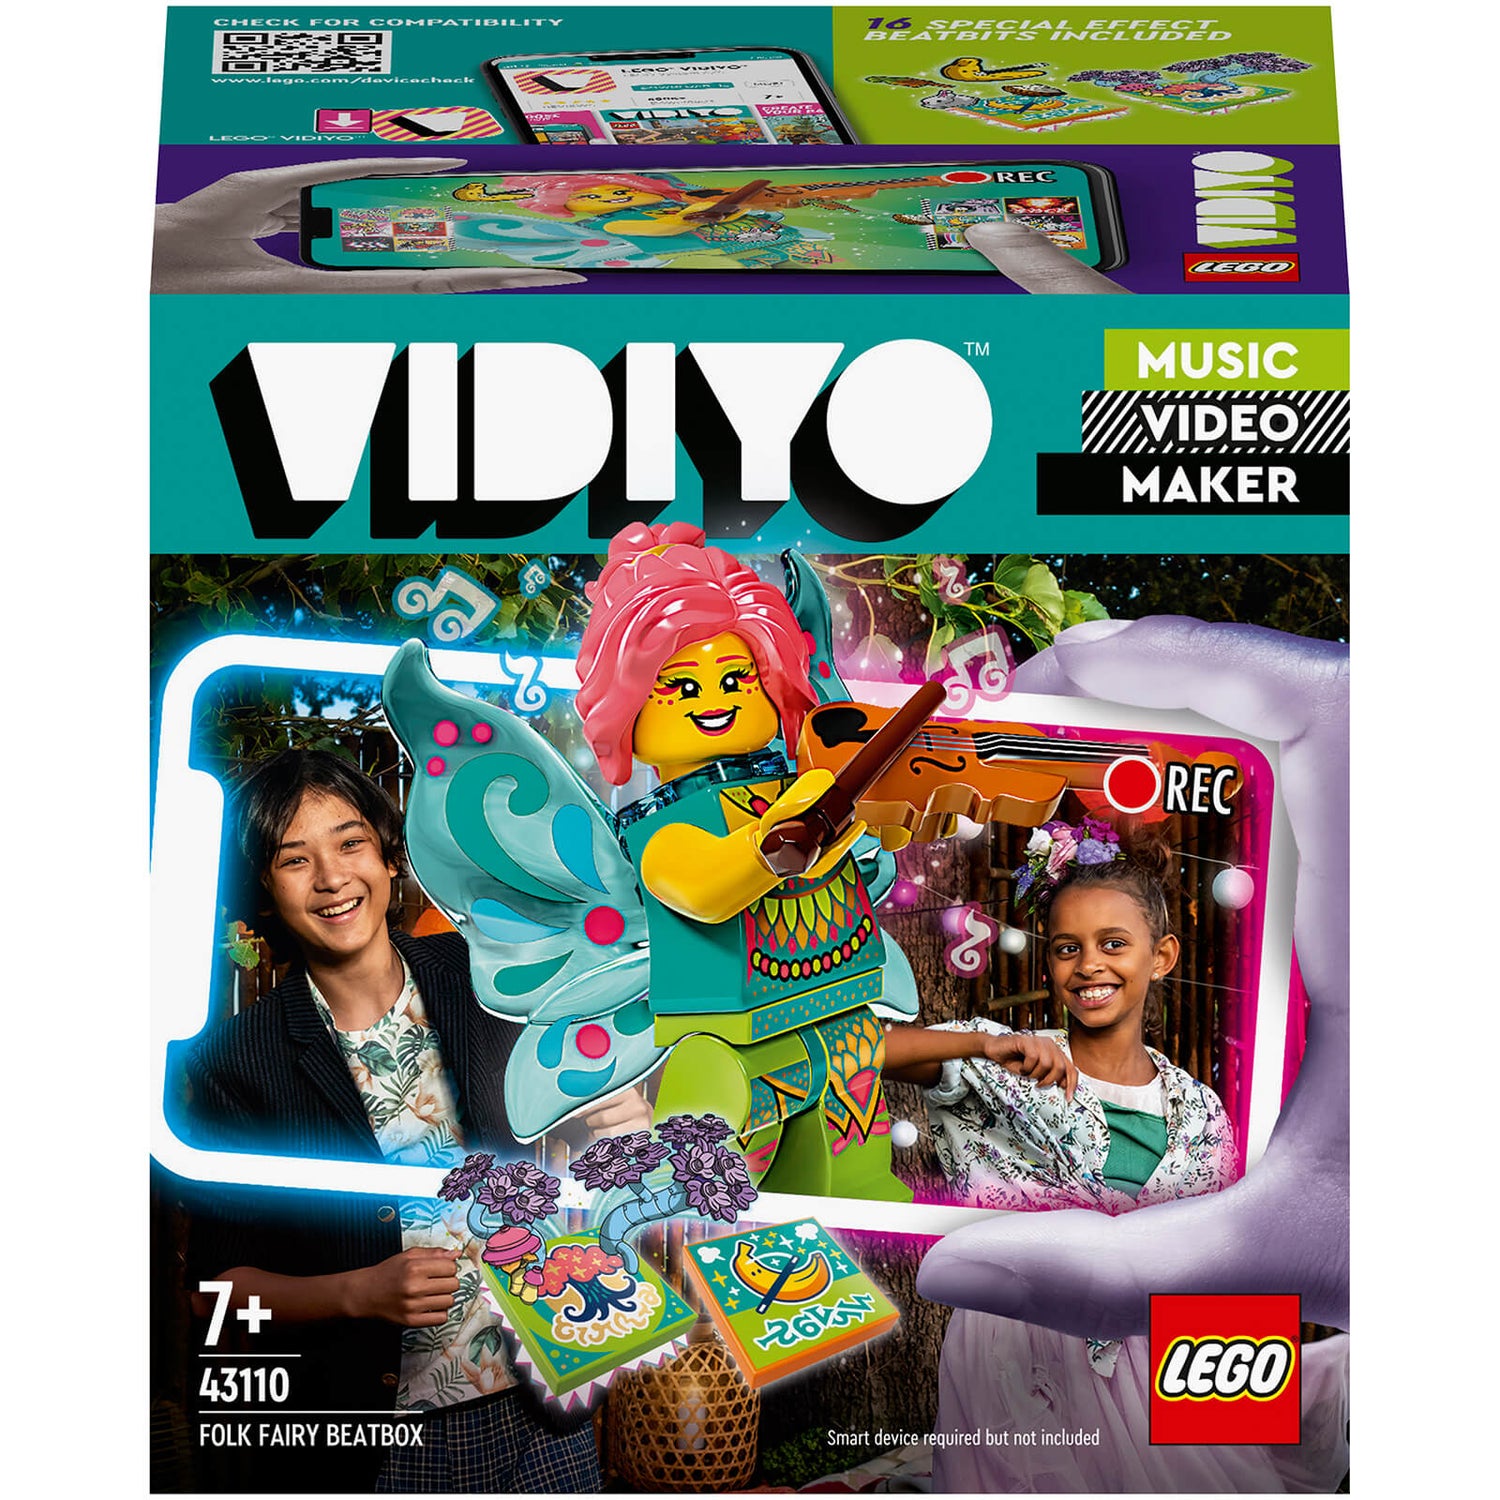 LEGO VIDIYO Folk Fairy BeatBox Music Video Maker Toy (43110)